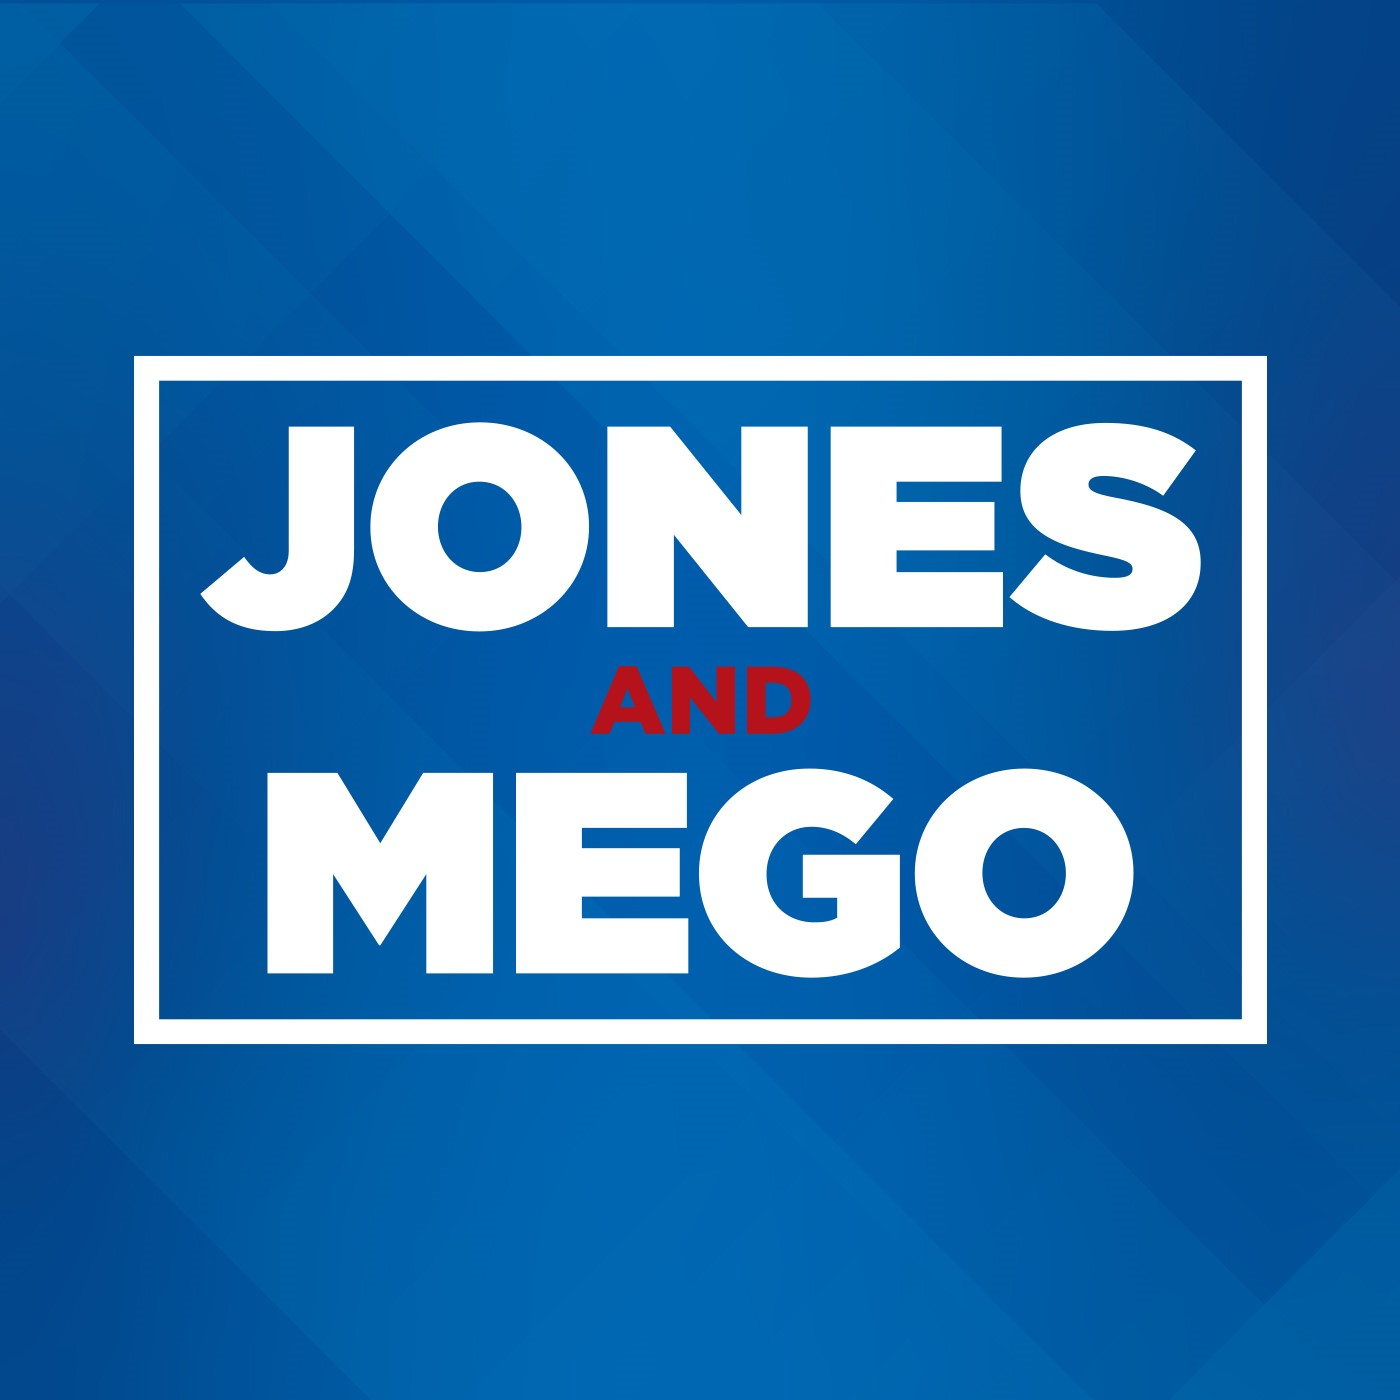 Jones and Mego talk Patriots - Interview with Mac Jones